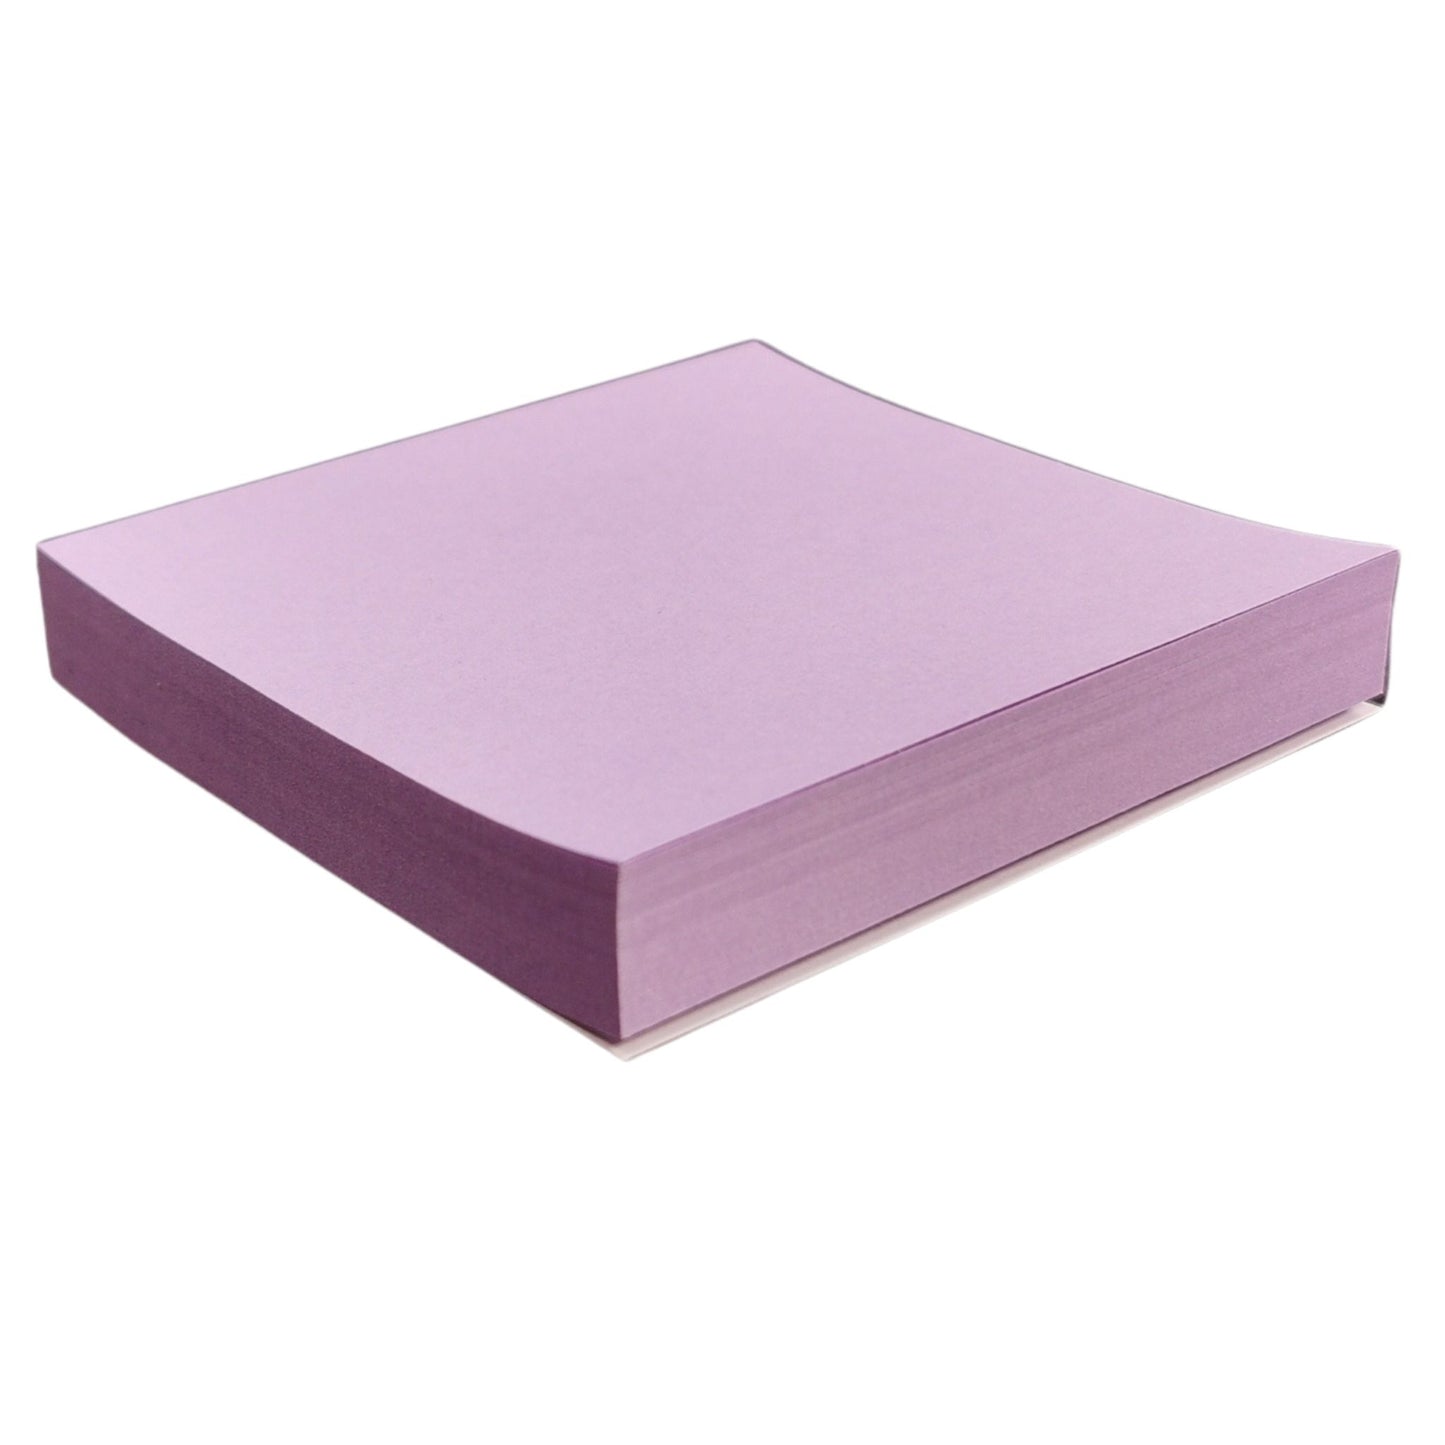 Eco-Friendly Pastel Purple/Lilac Sticky Note Pads